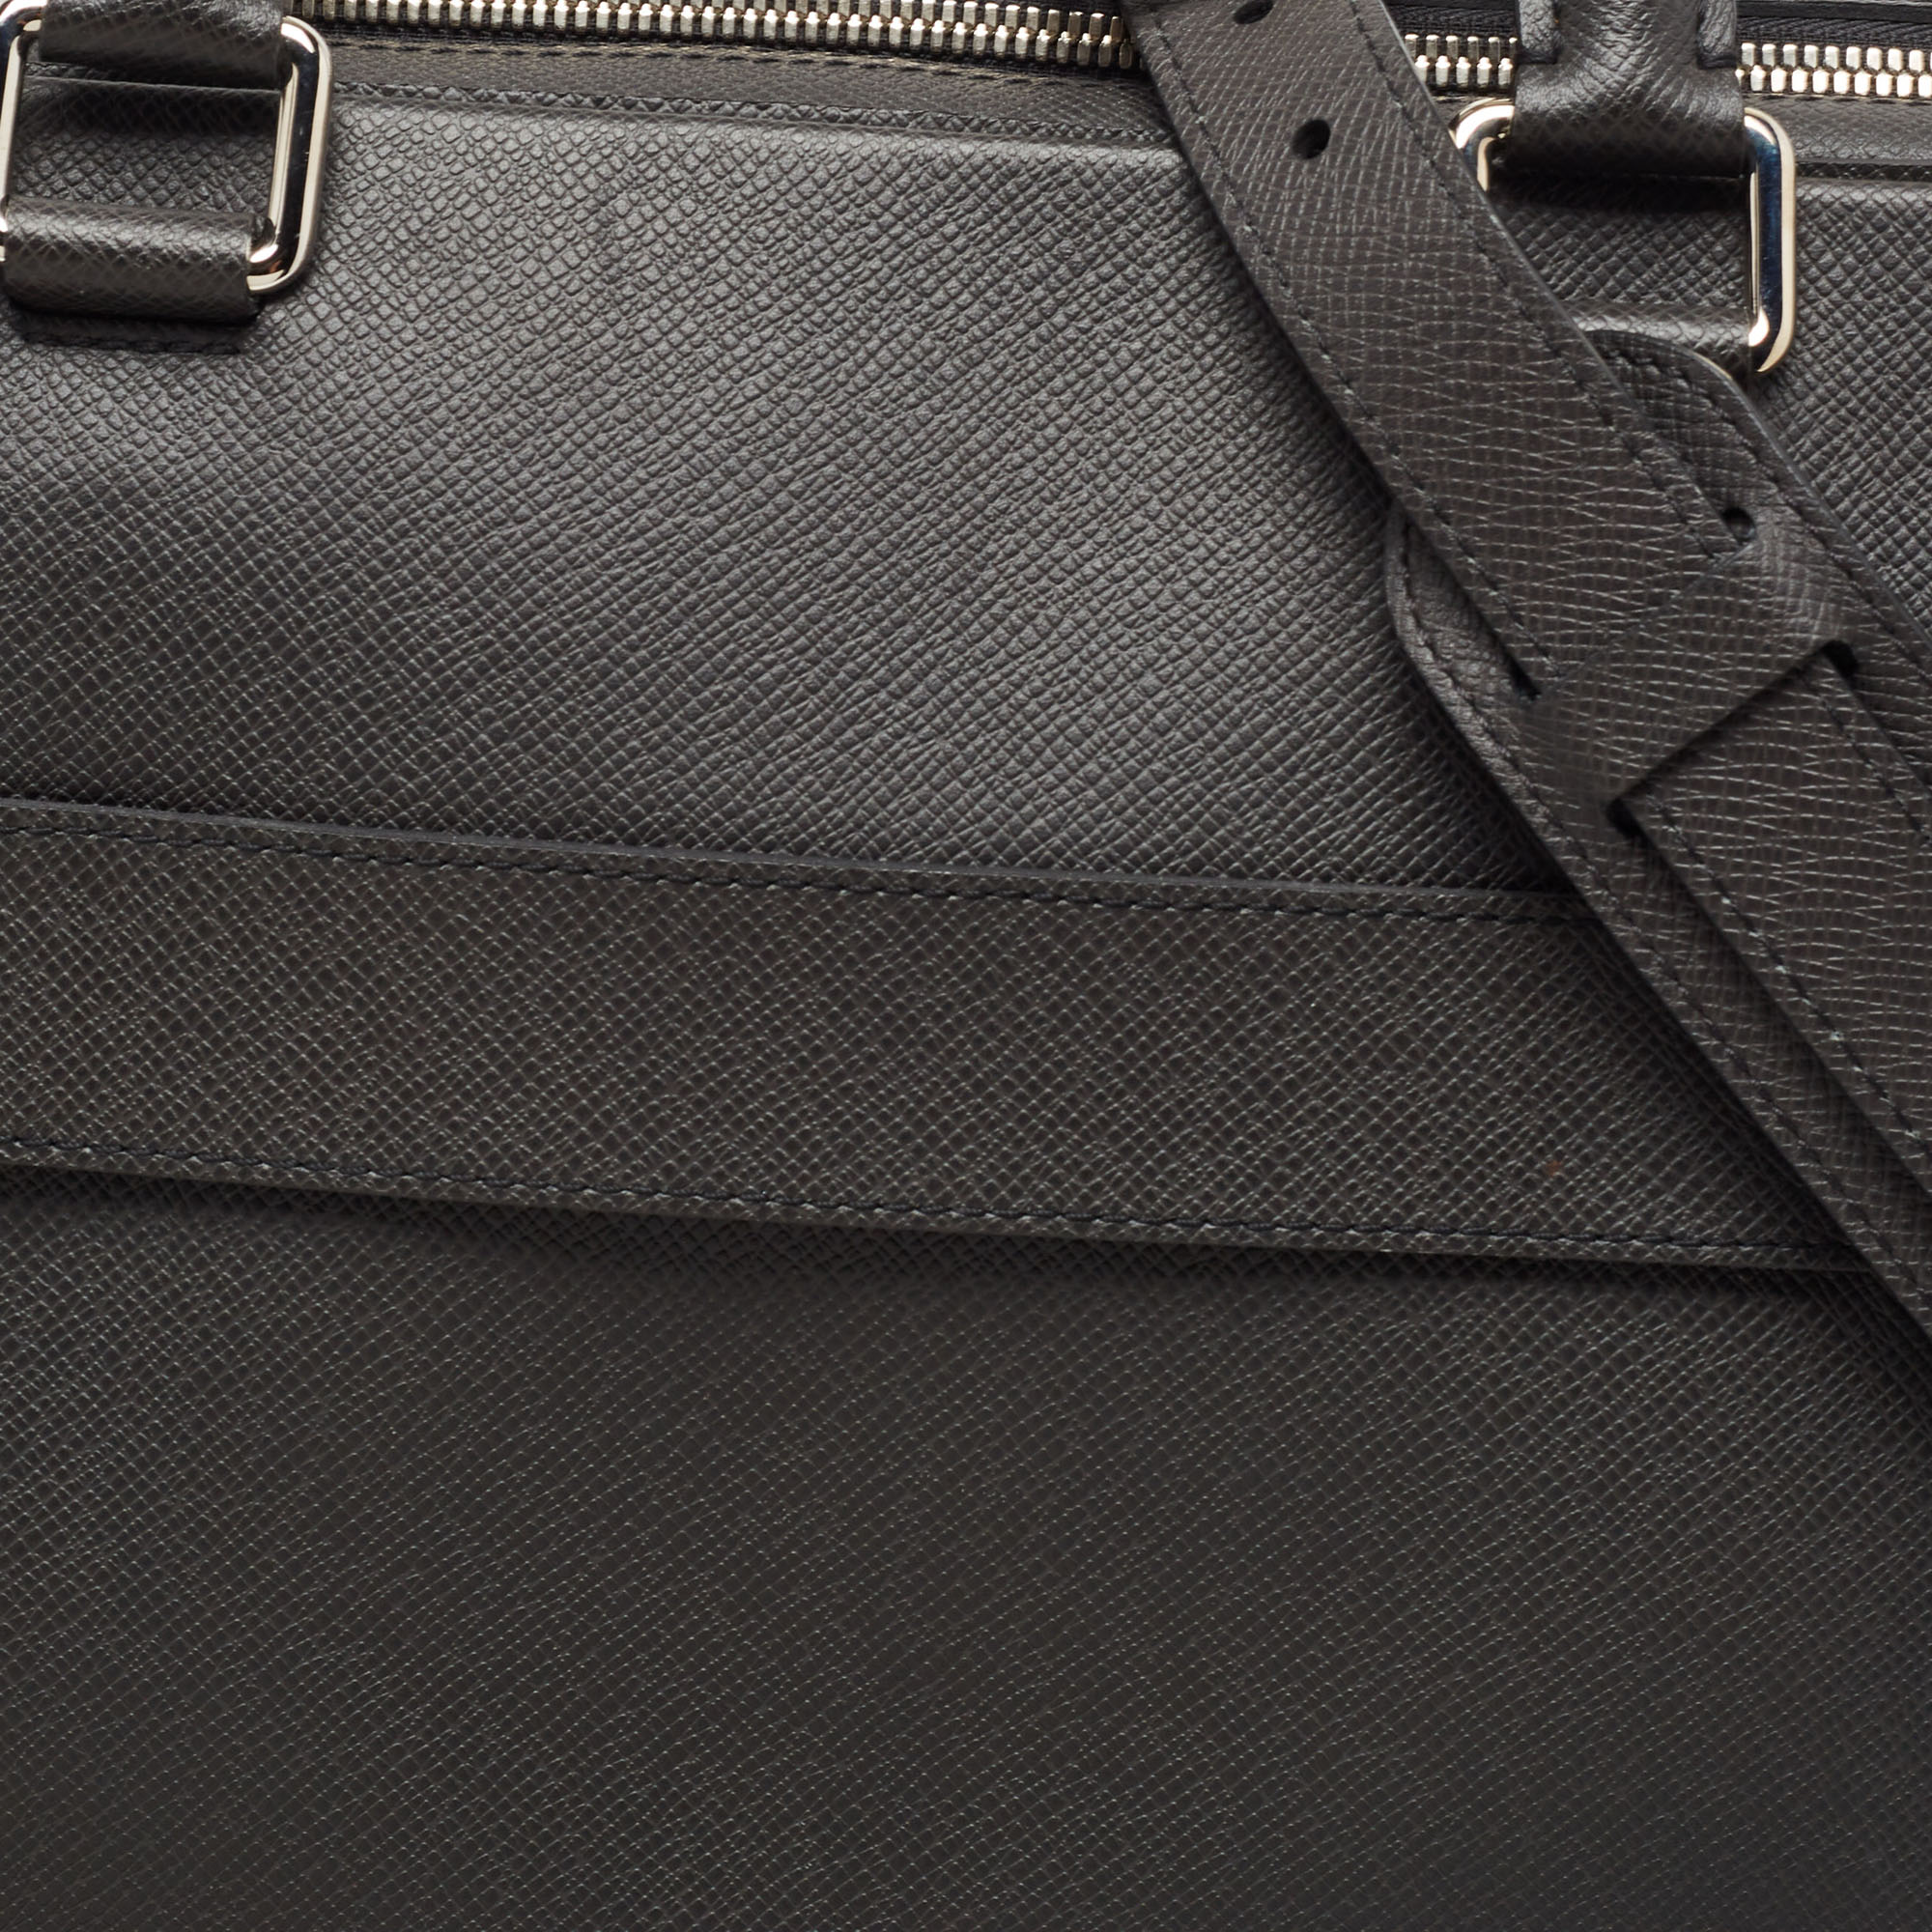 Louis Vuitton Black Taiga Leather Documents Briefcase Bag